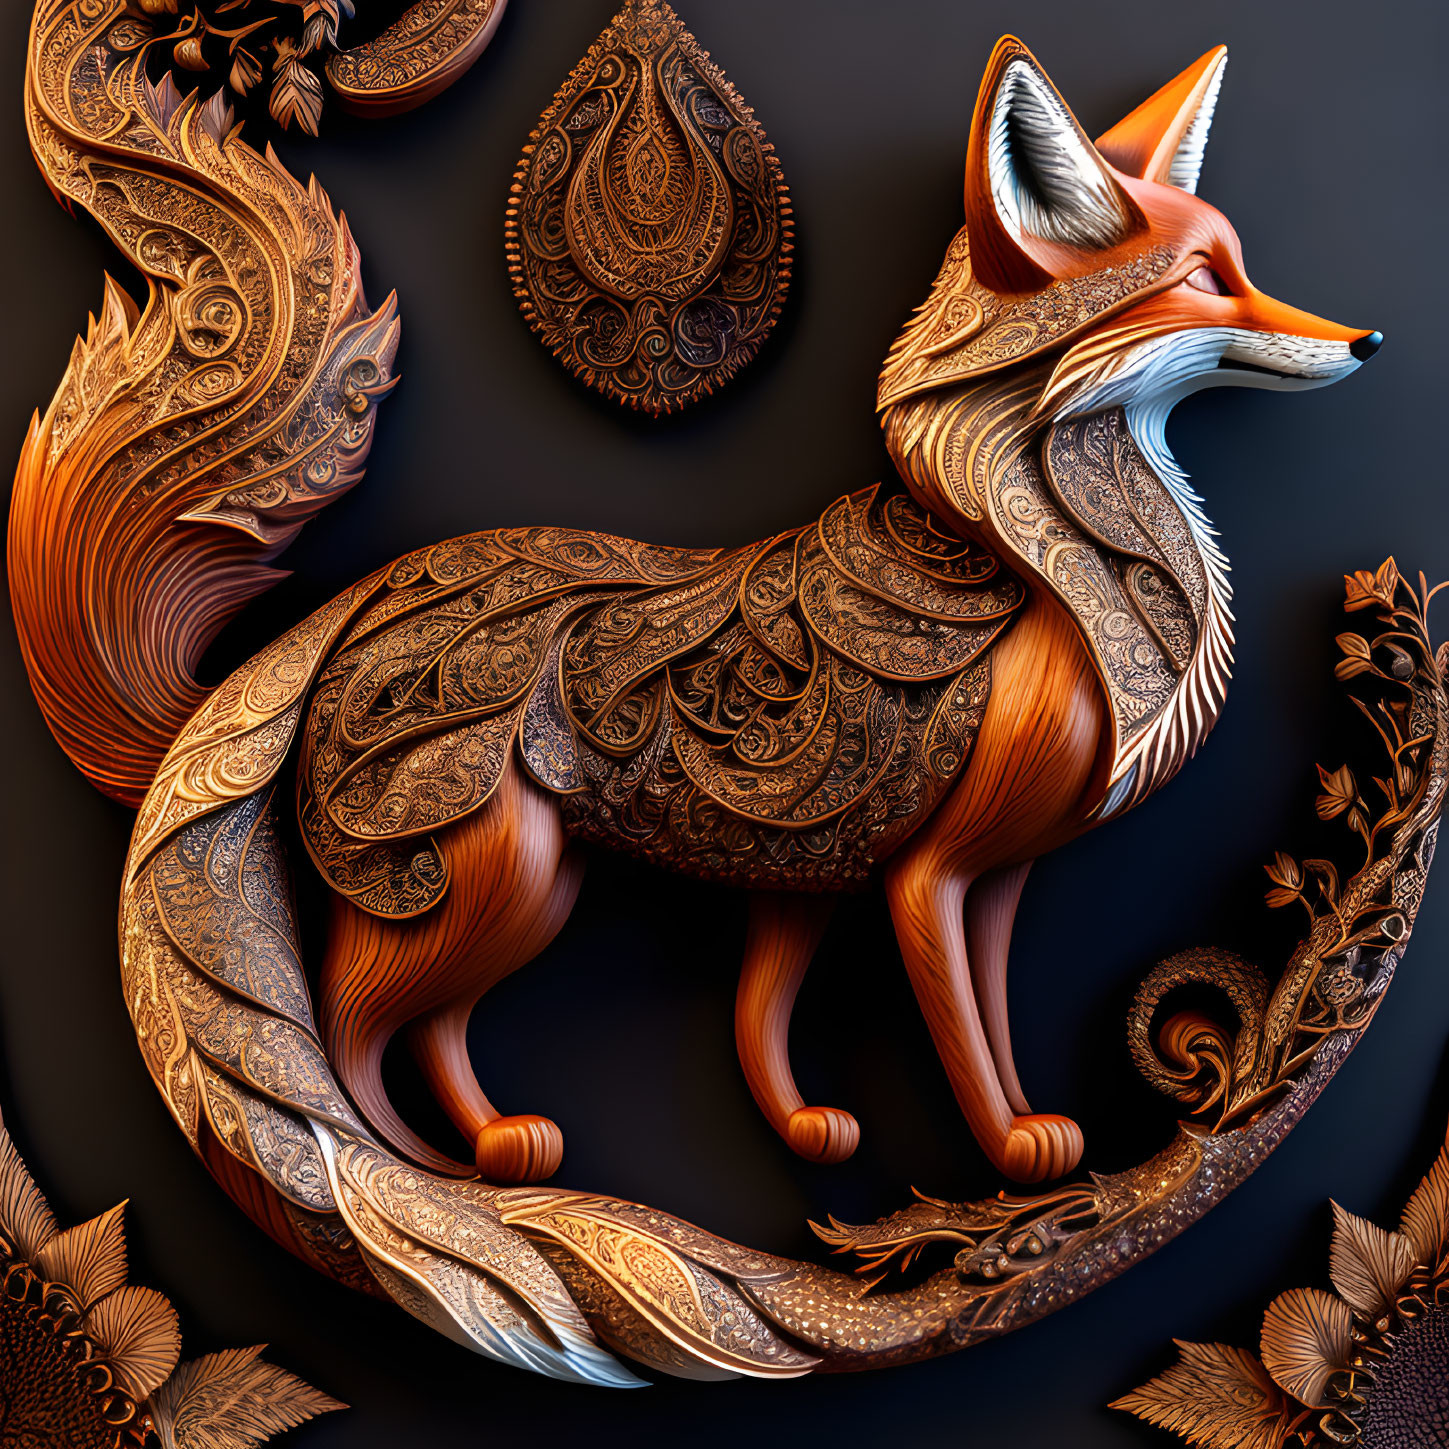 Intricate stylized fox design on dark background with ornate patterns